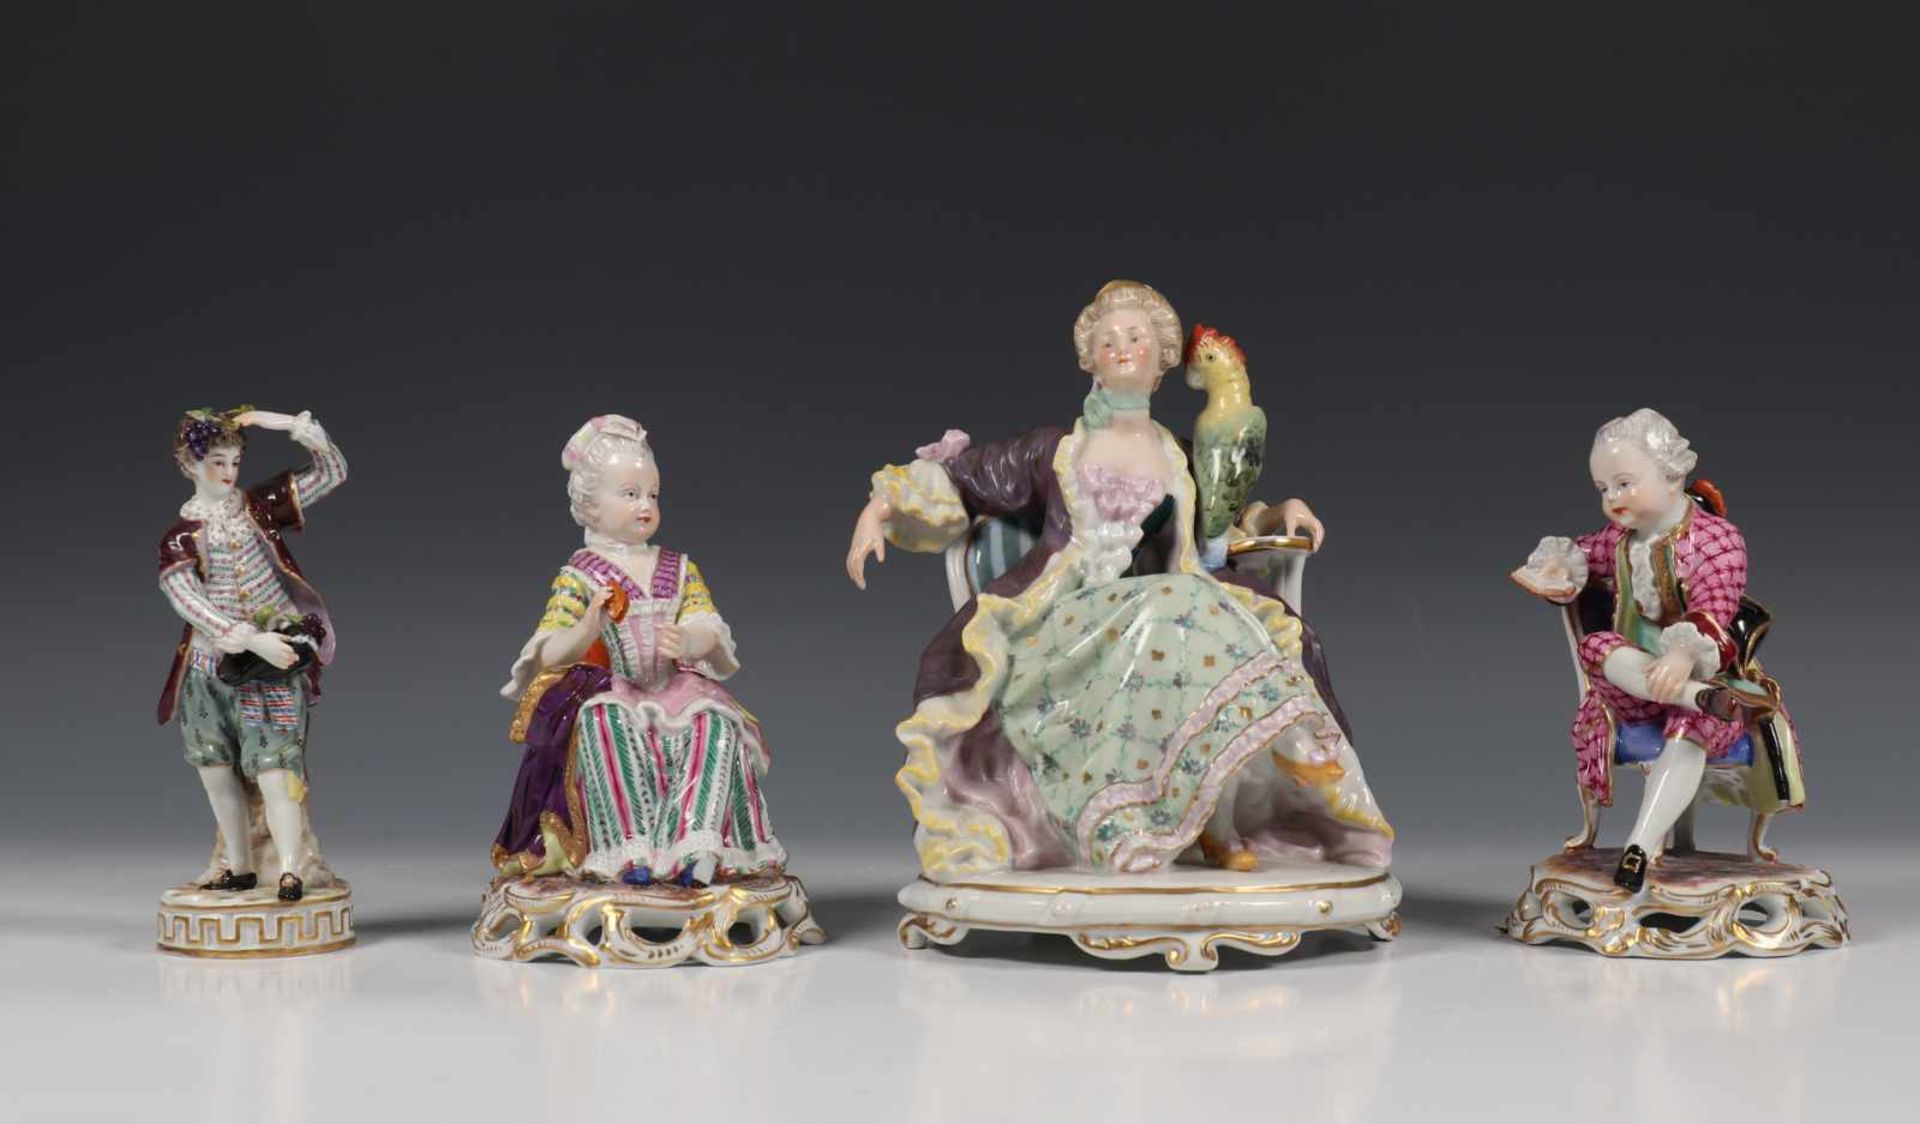 Thüringen, vier porseleinen groepen, begin 20e eeuwFiguren op stoel in 18e eeuwse kledij, h. 14-19